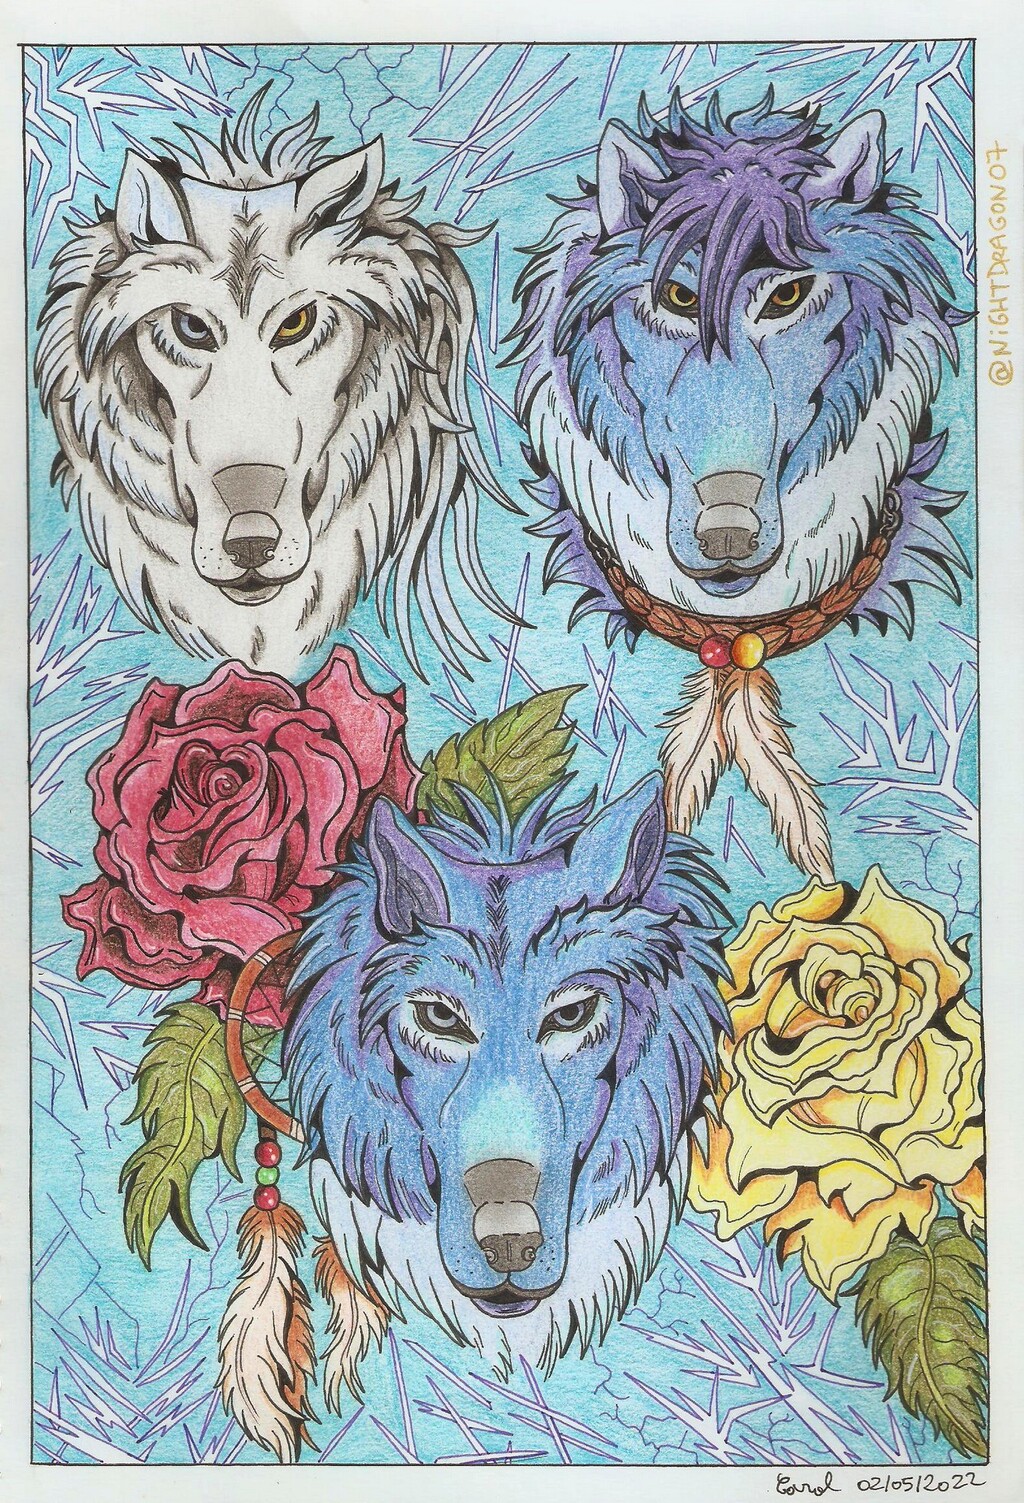 Most recent image: Ice wolf trio